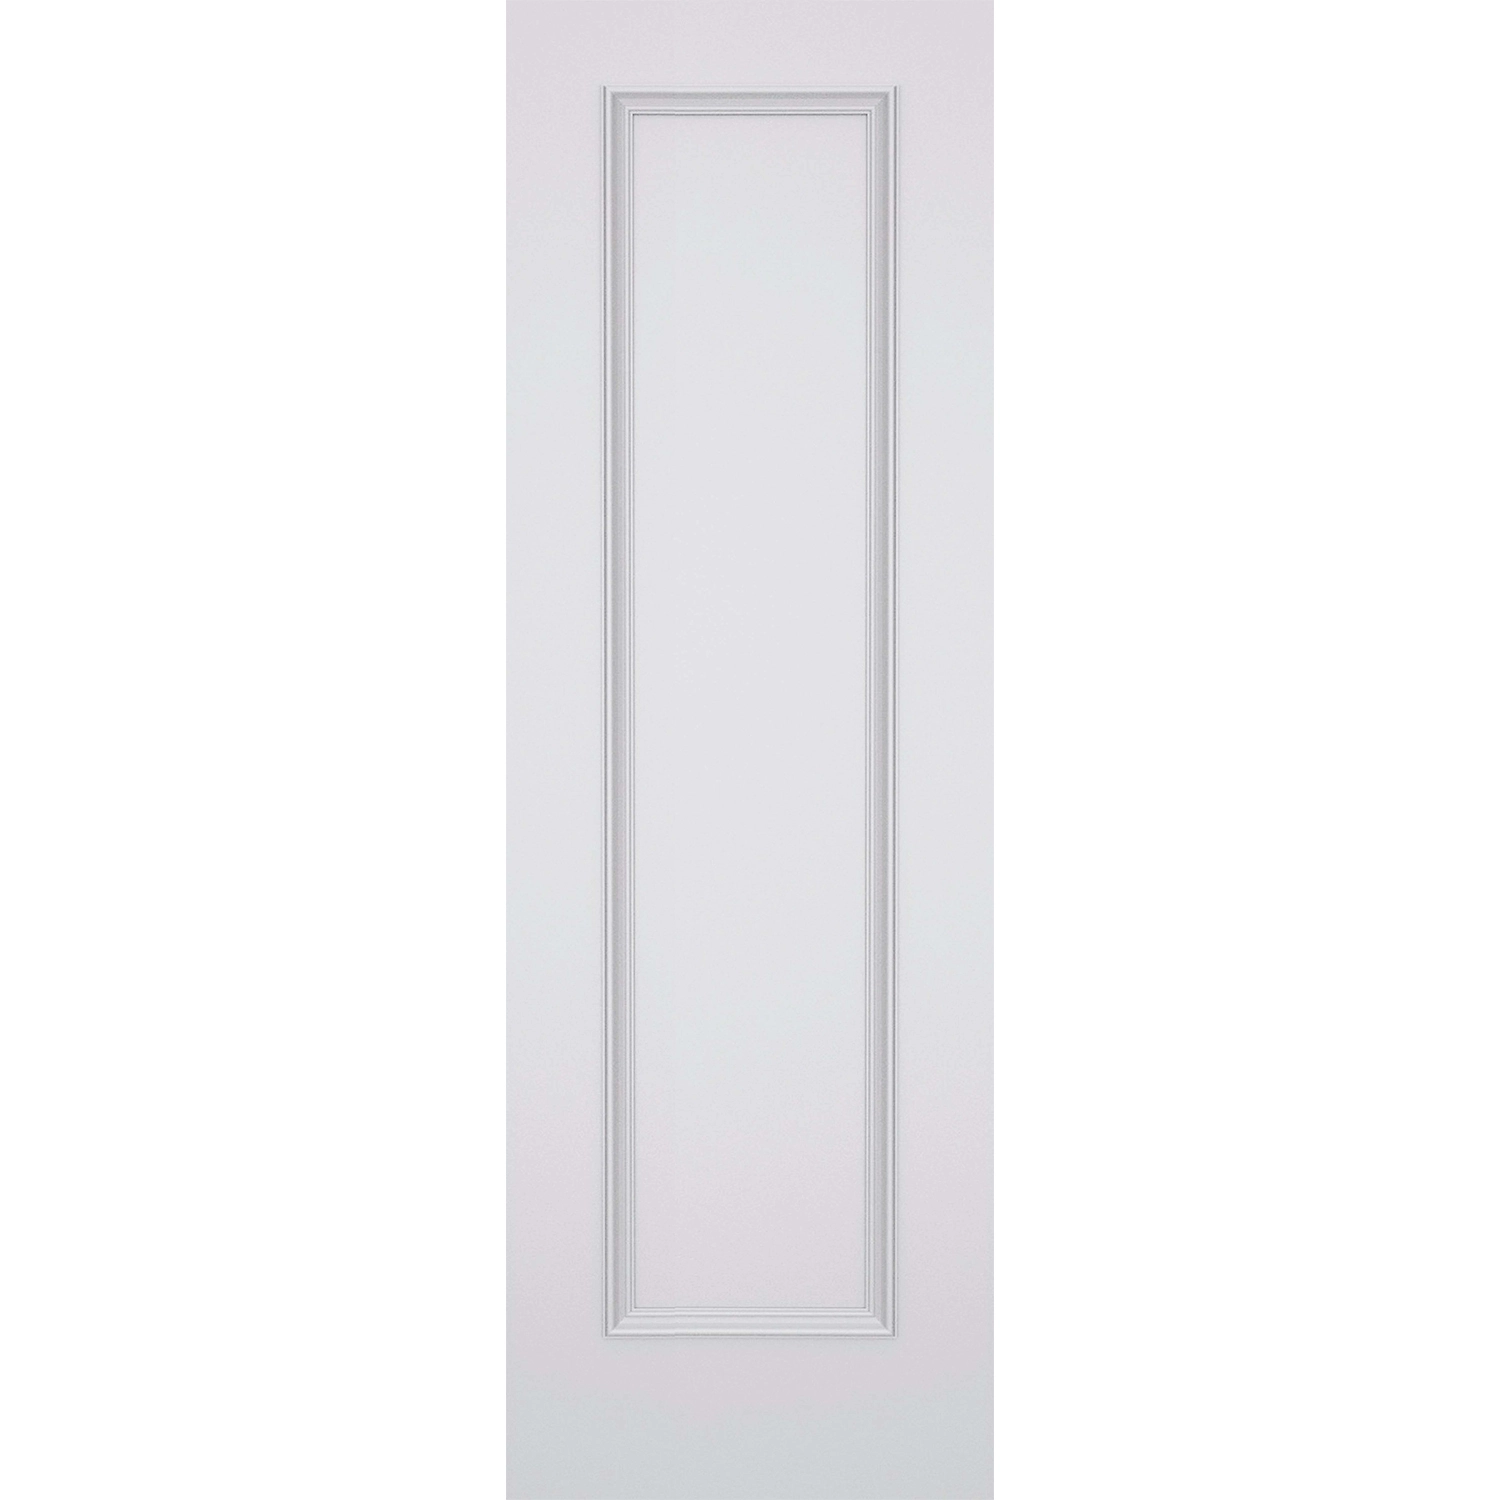 1 Panel 80 x 26 x 1-3/8 Smooth Hollow Door Raised